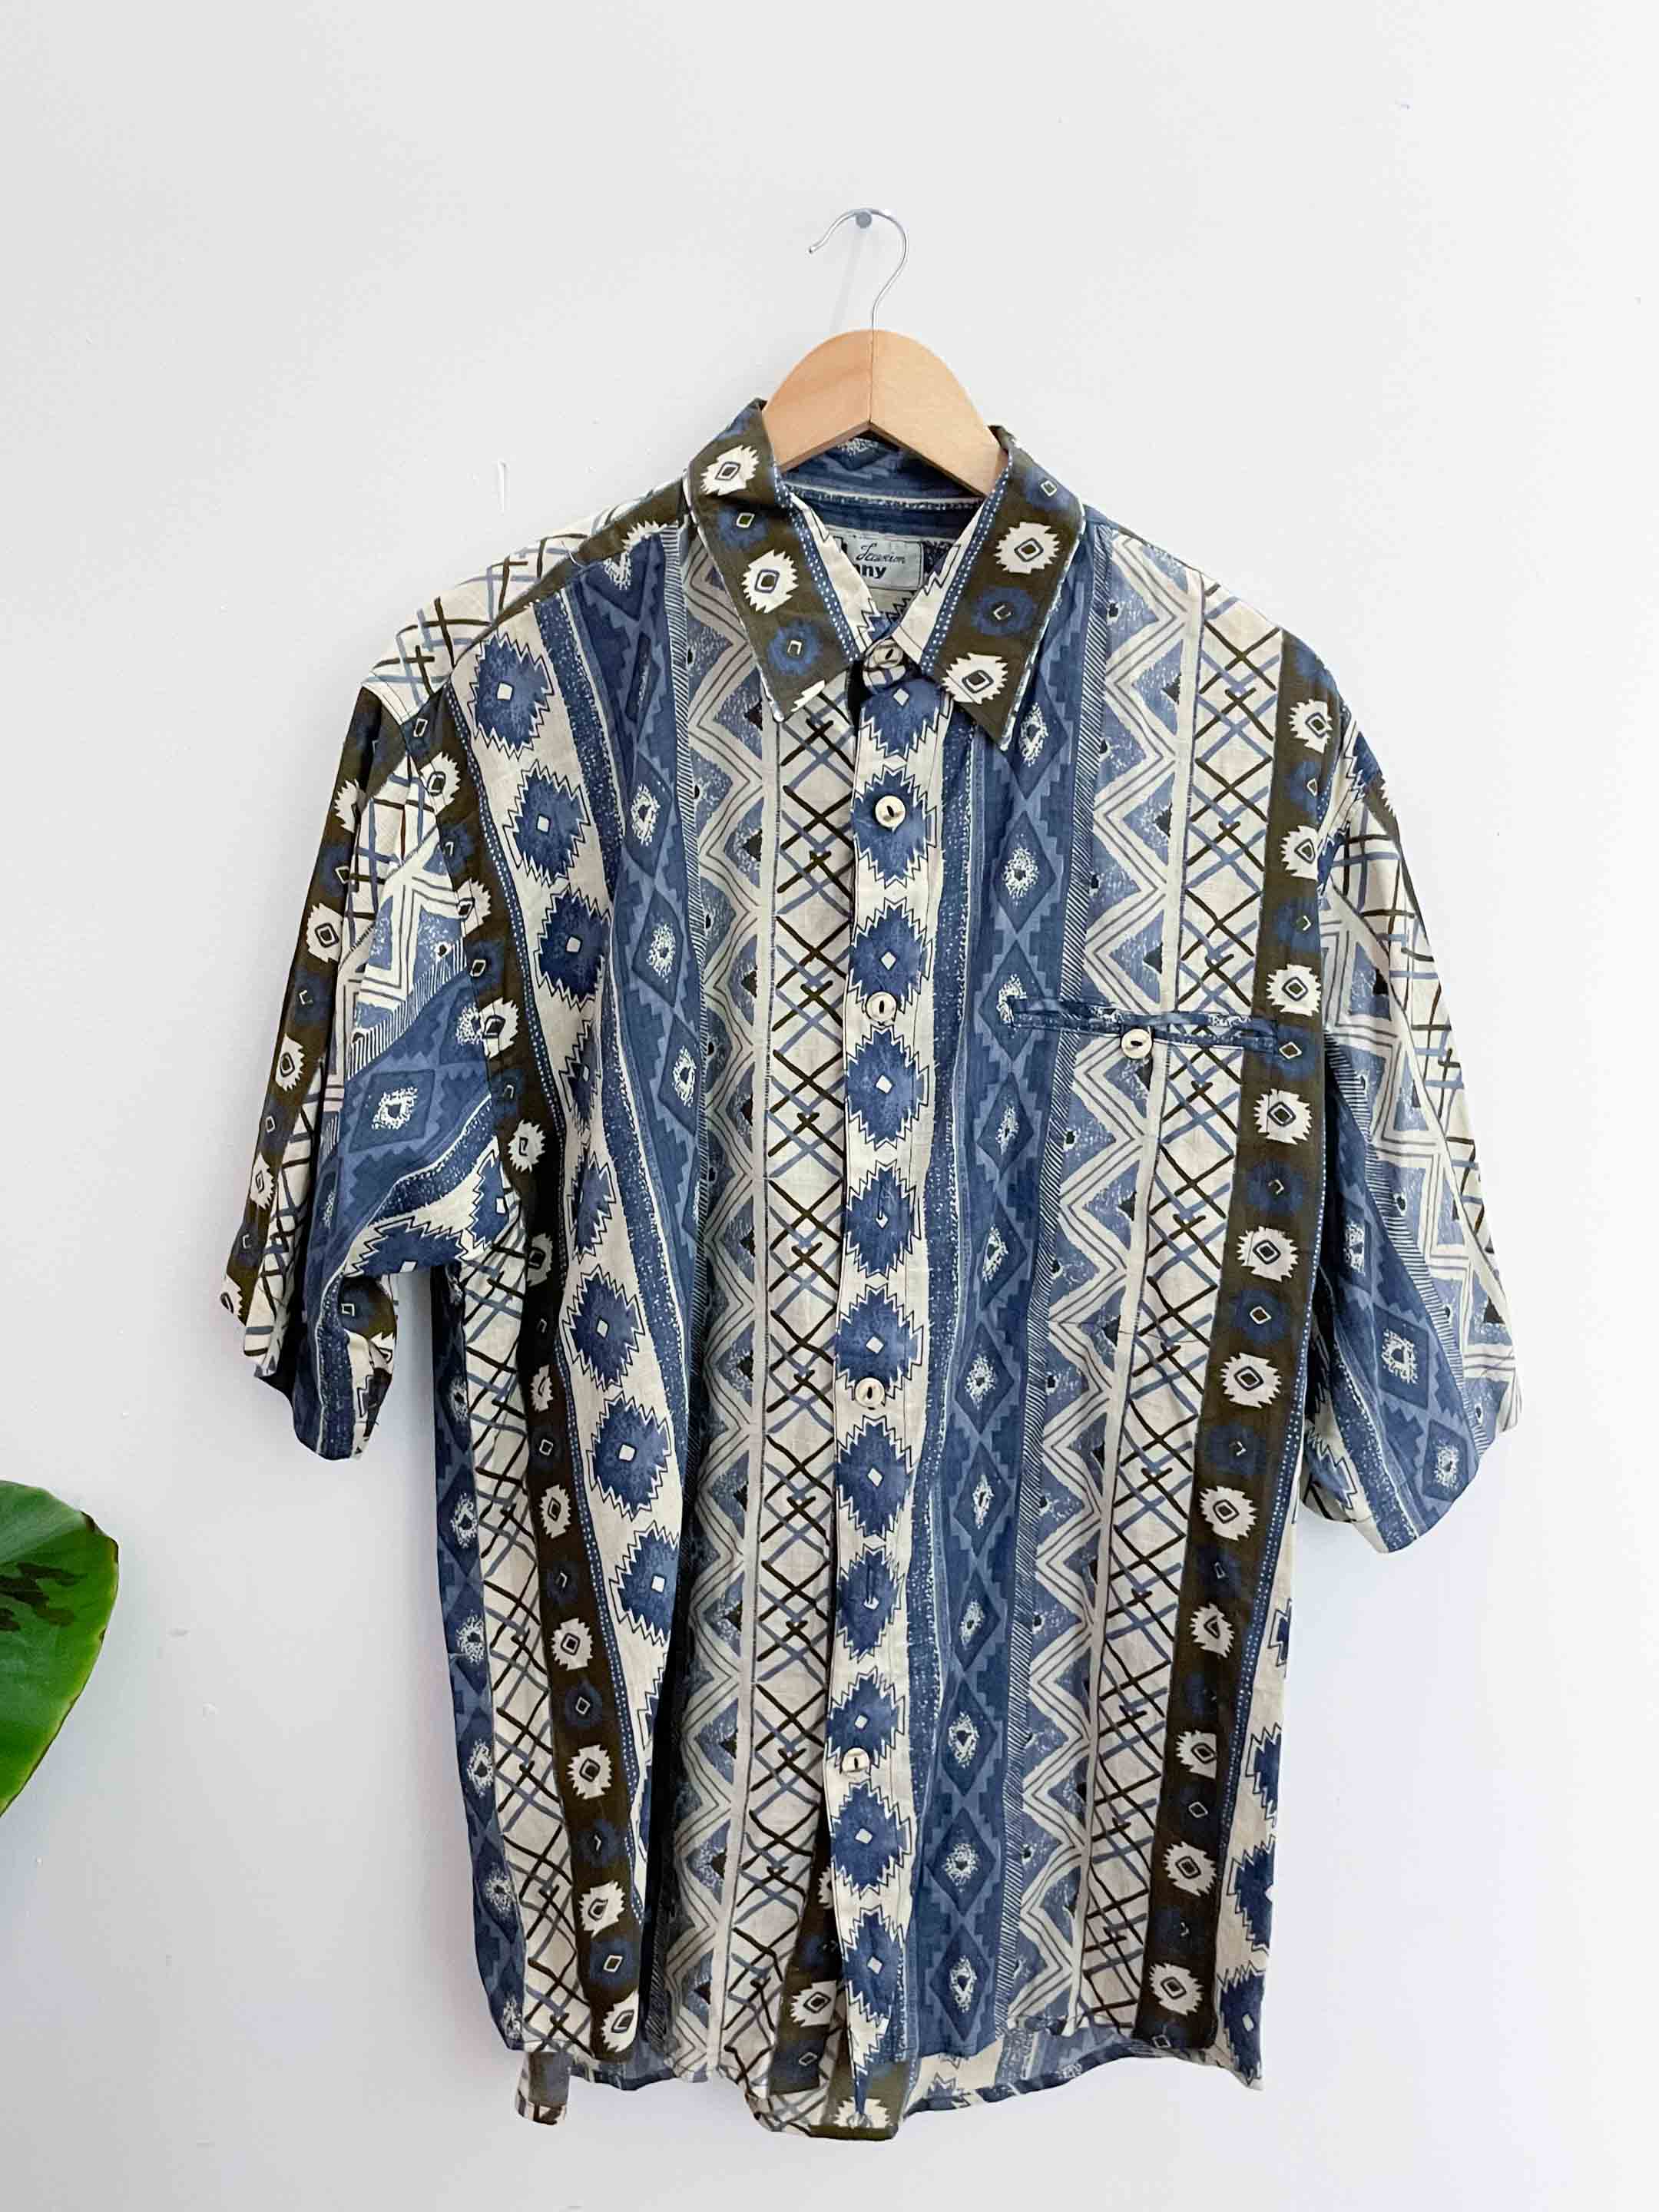 Vintage blue abstract pattern festive shirt size XL